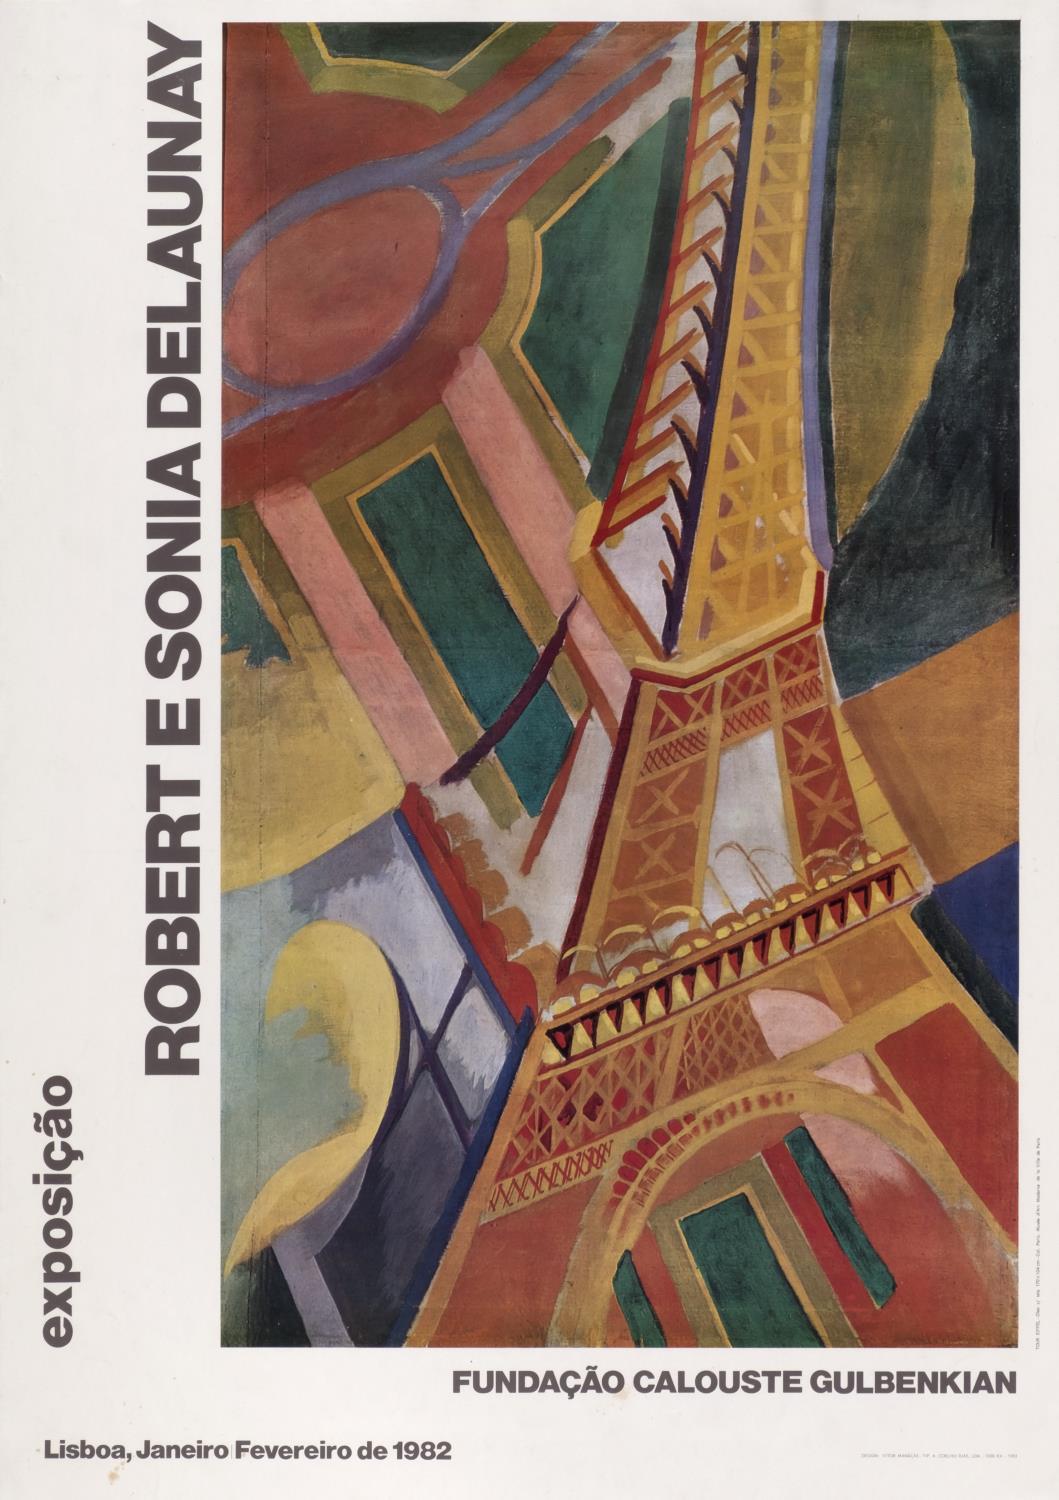 Robert e Sonia Delaunay (1885 – 1941, 1885 – 1979)